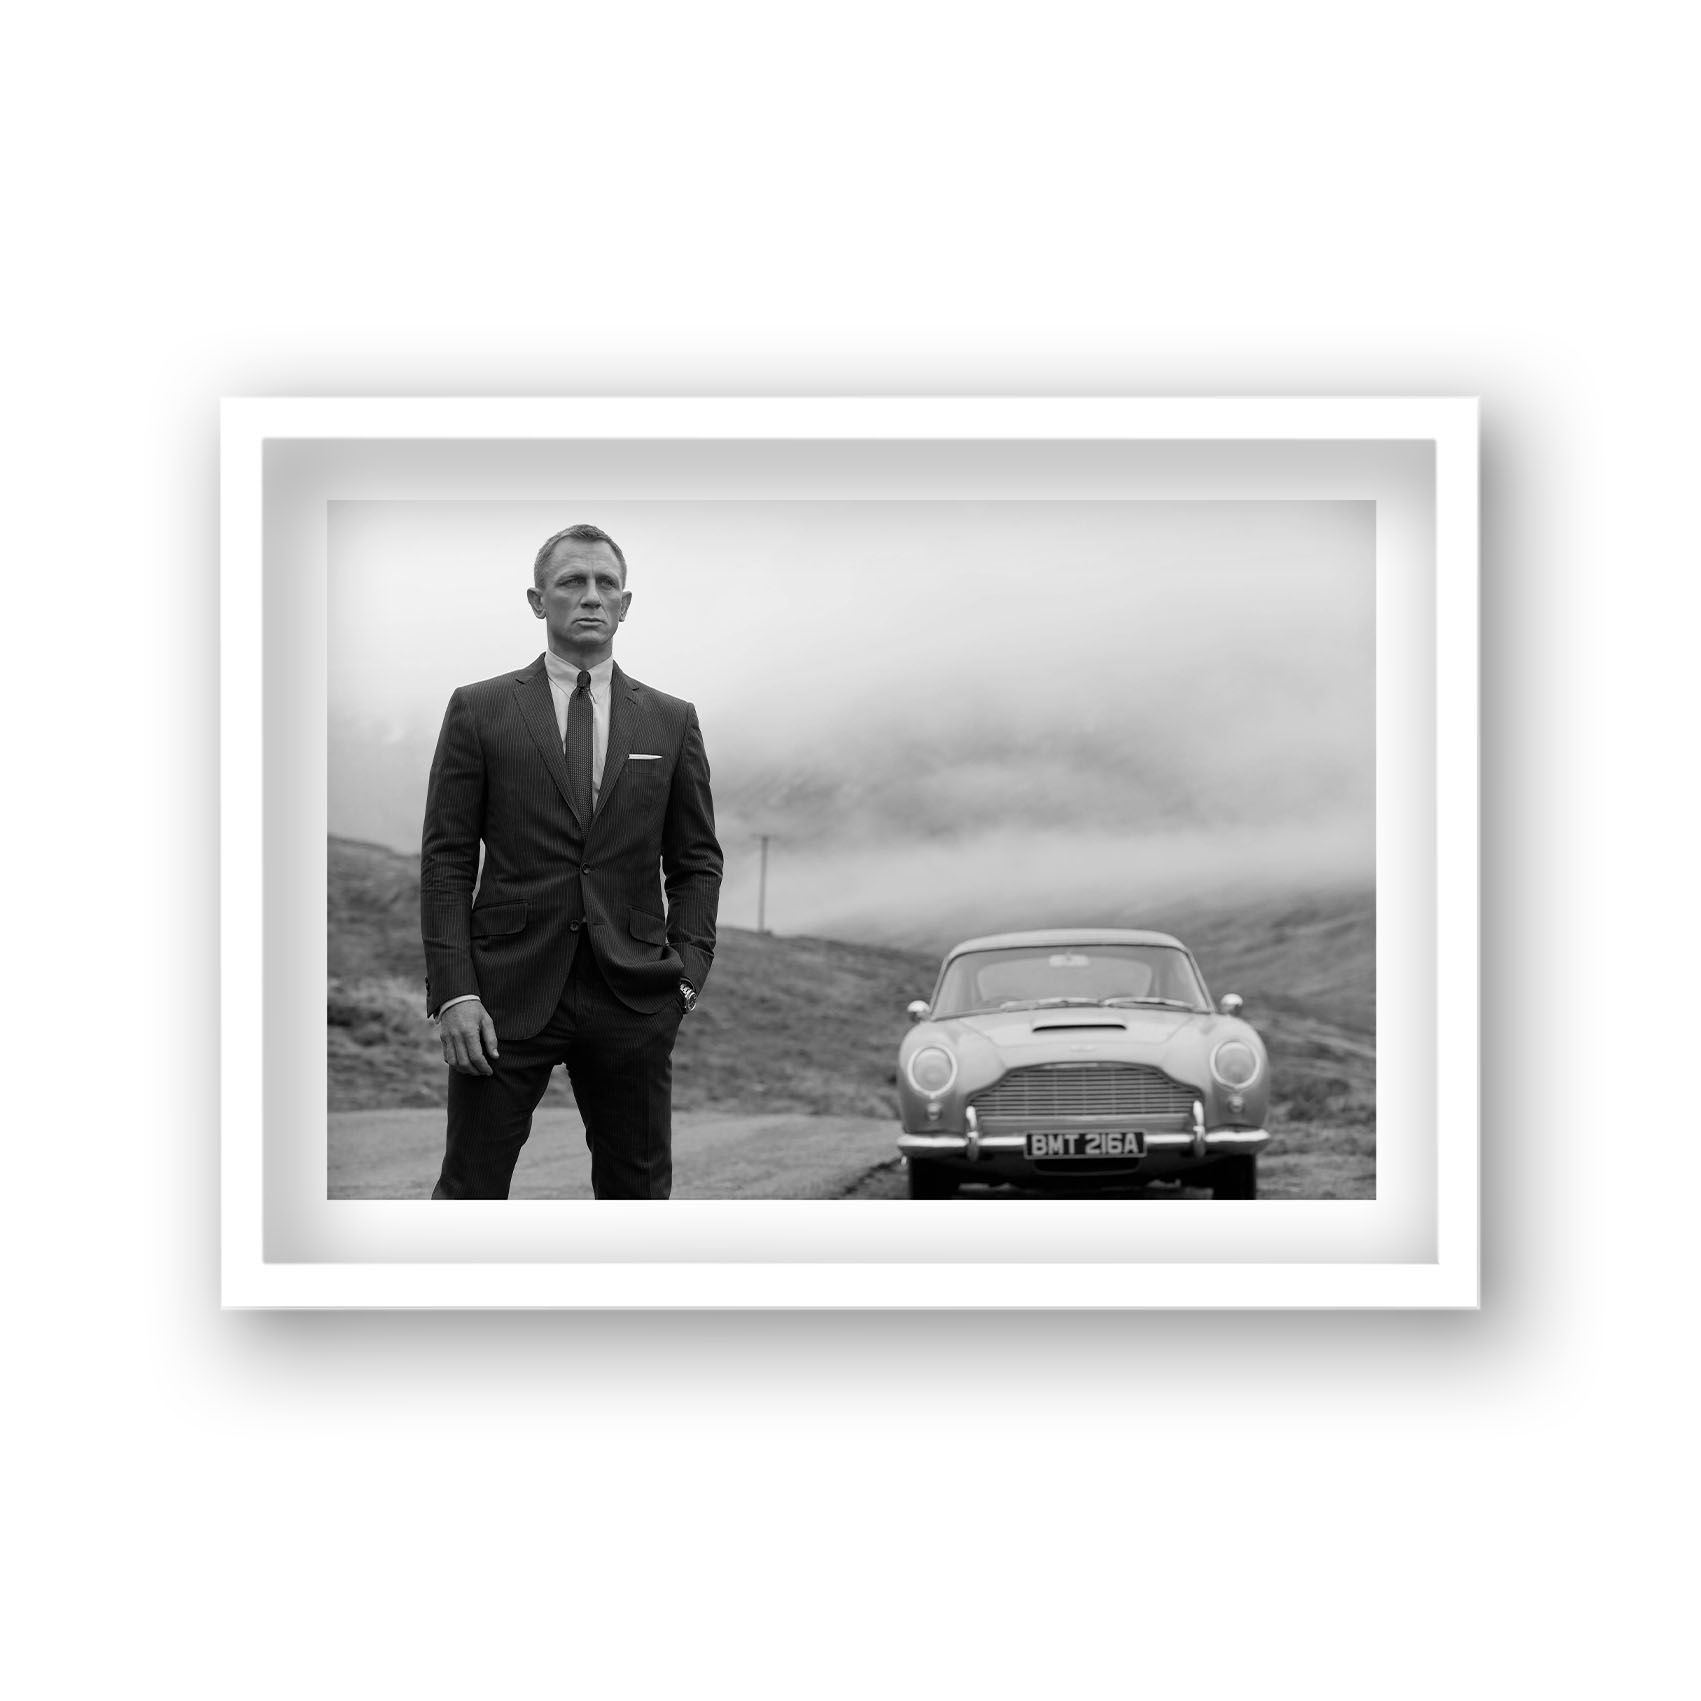 Daniel Craig as James Bond with Aston Martin DB5